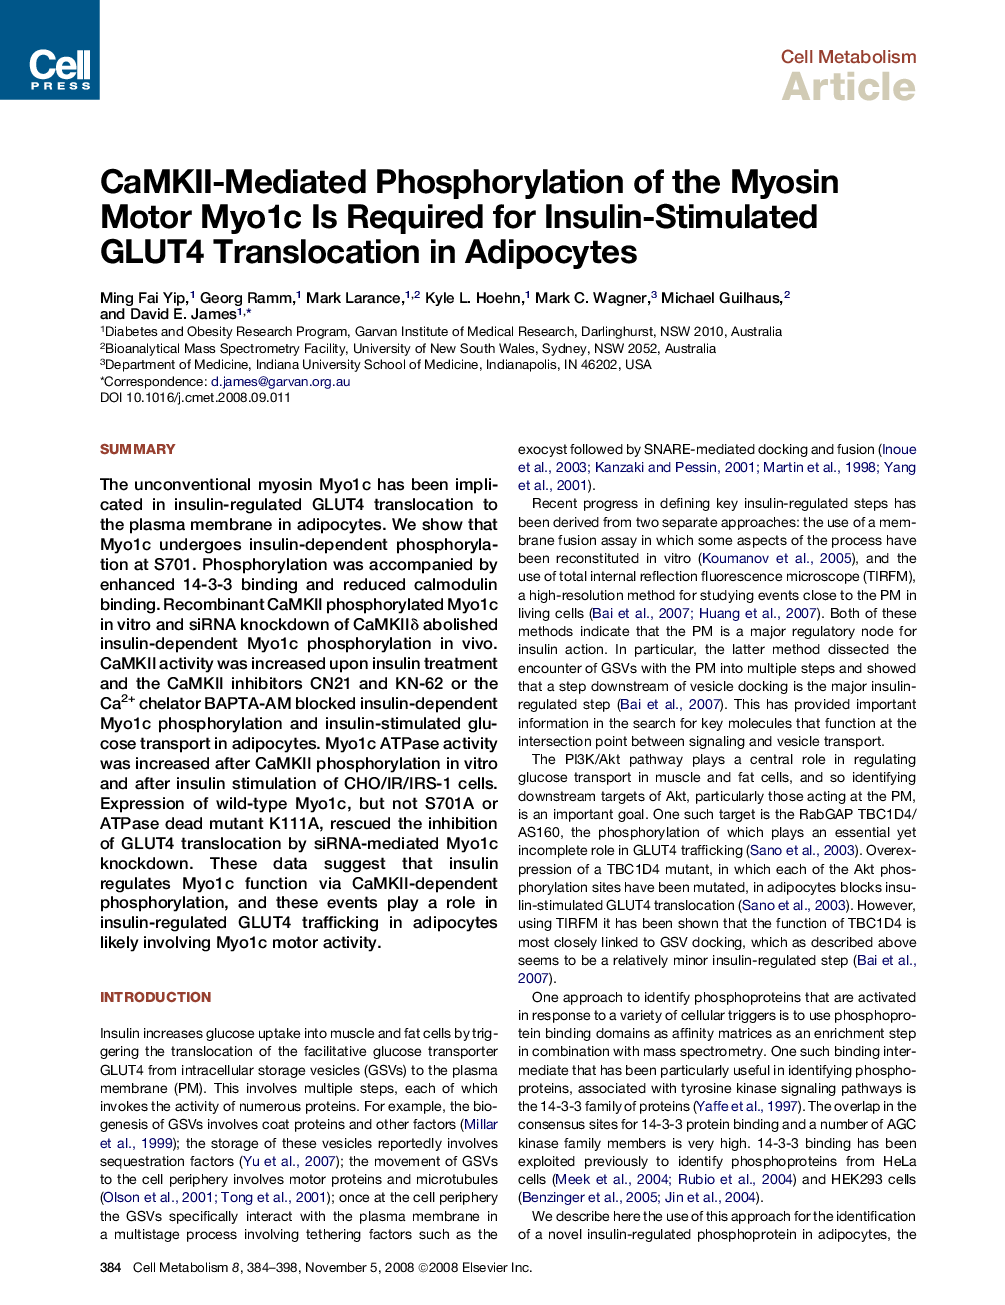 CaMKII-Mediated Phosphorylation of the Myosin Motor Myo1c Is Required for Insulin-Stimulated GLUT4 Translocation in Adipocytes